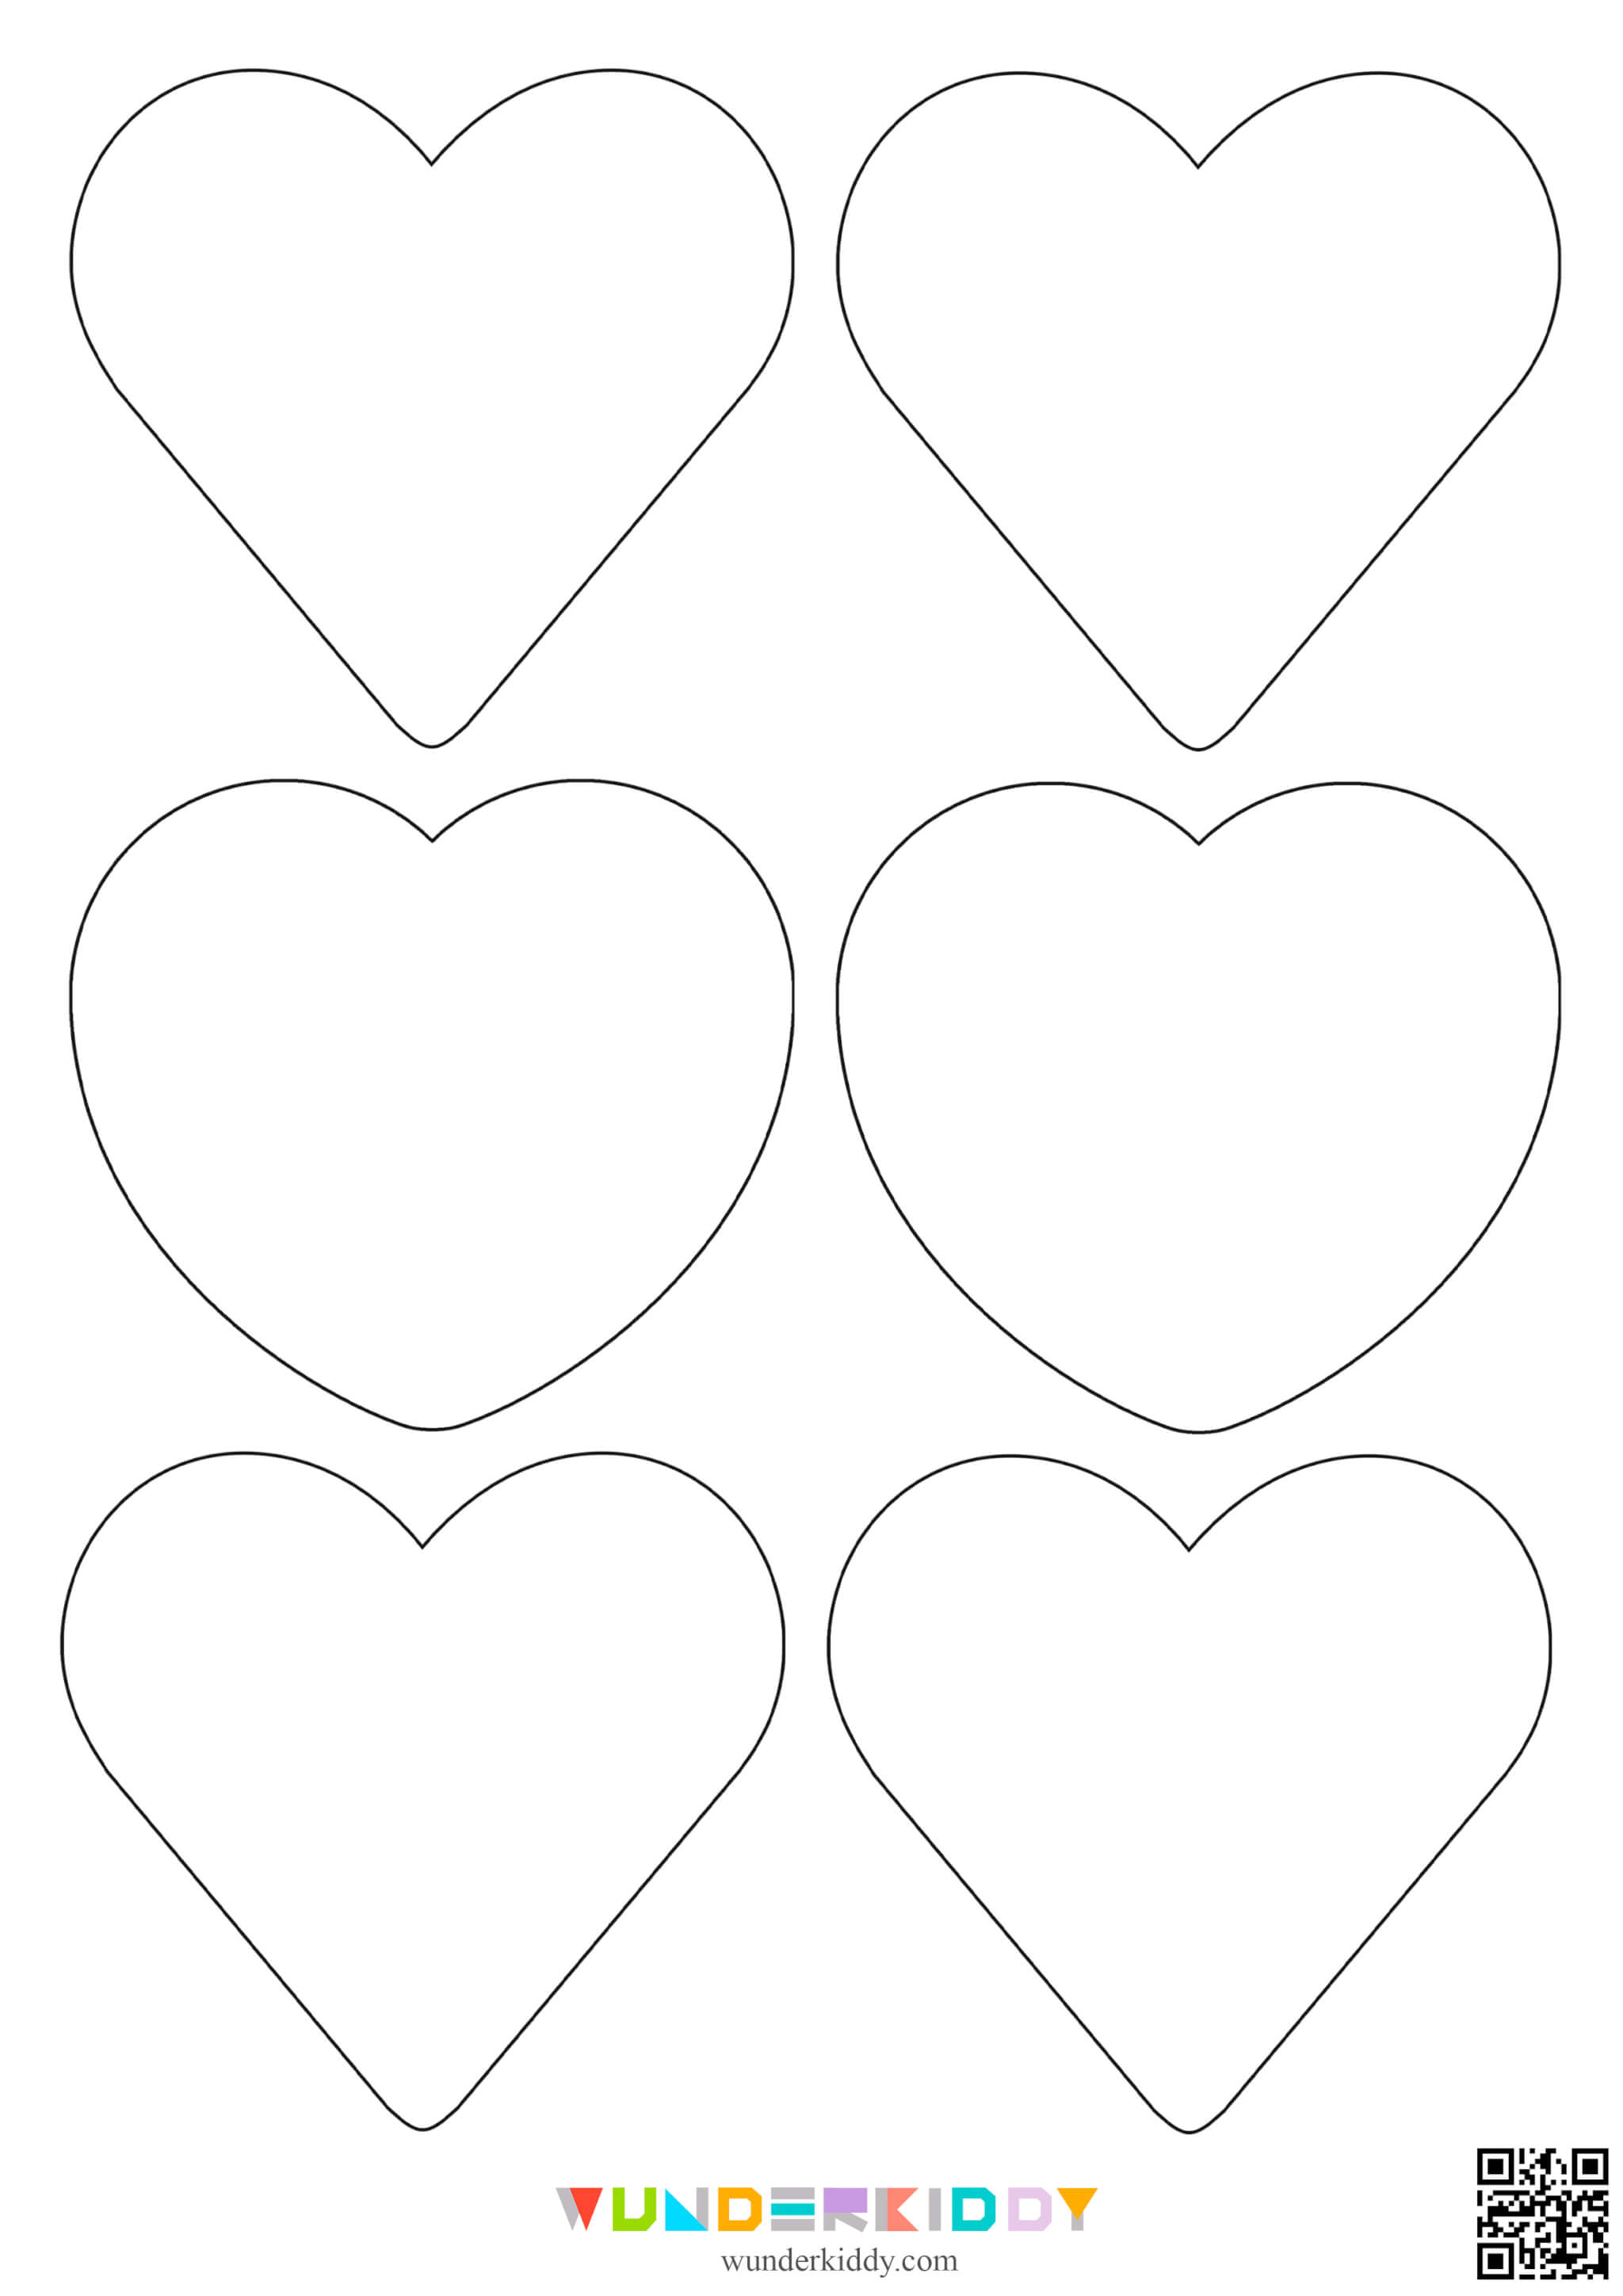 Heart Template Printable - Image 3